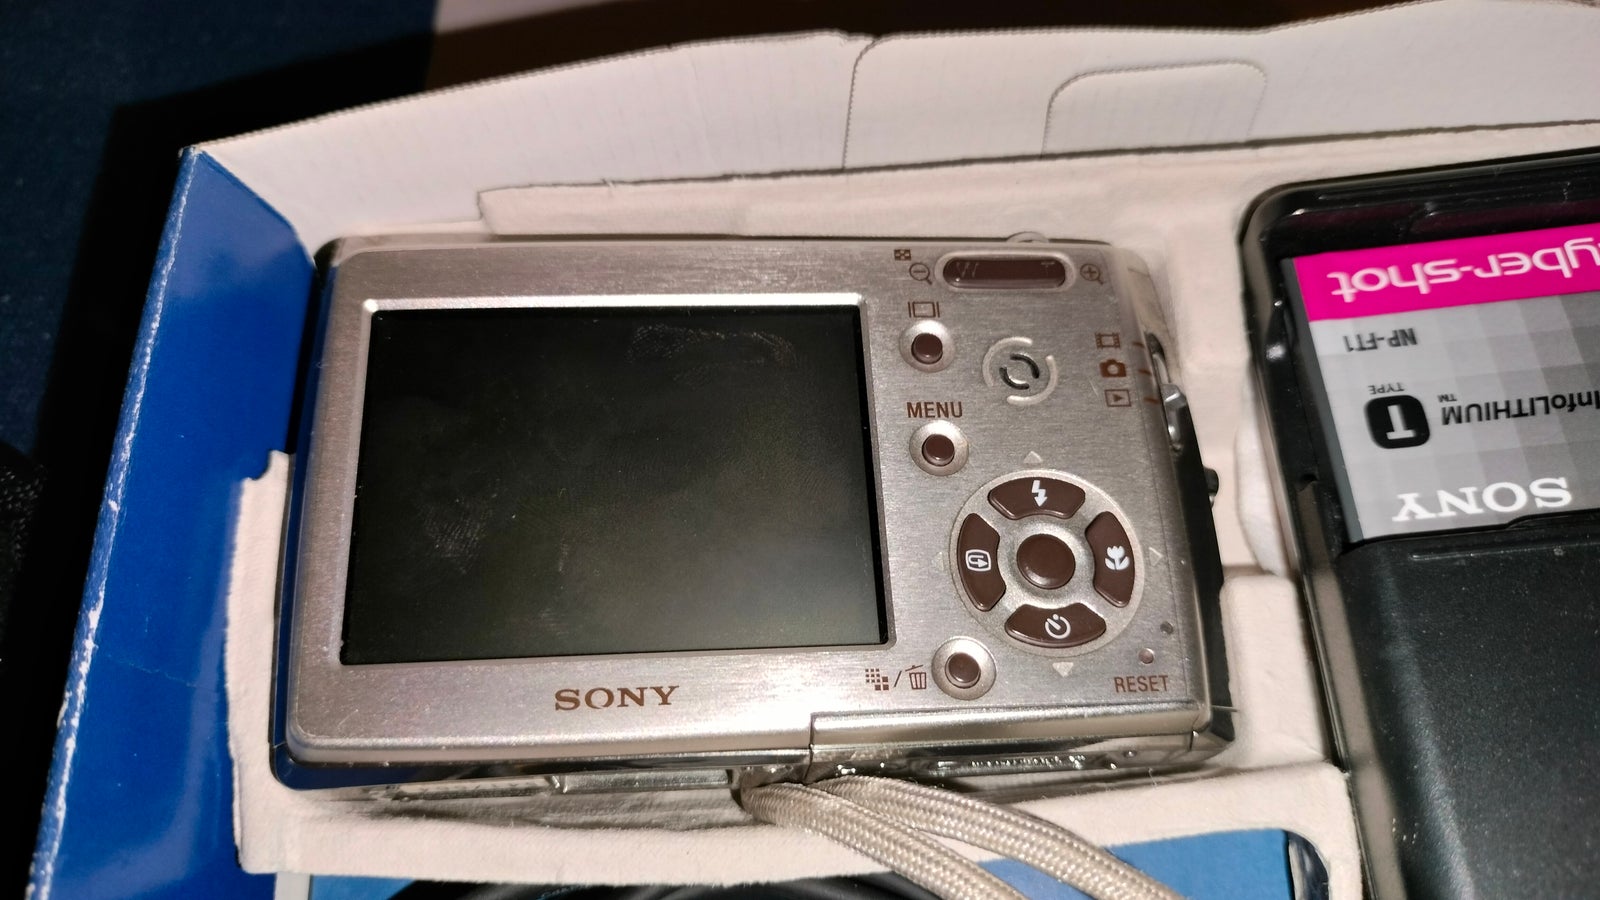 Sony, Sony dcs-T10, 7.2 megapixels